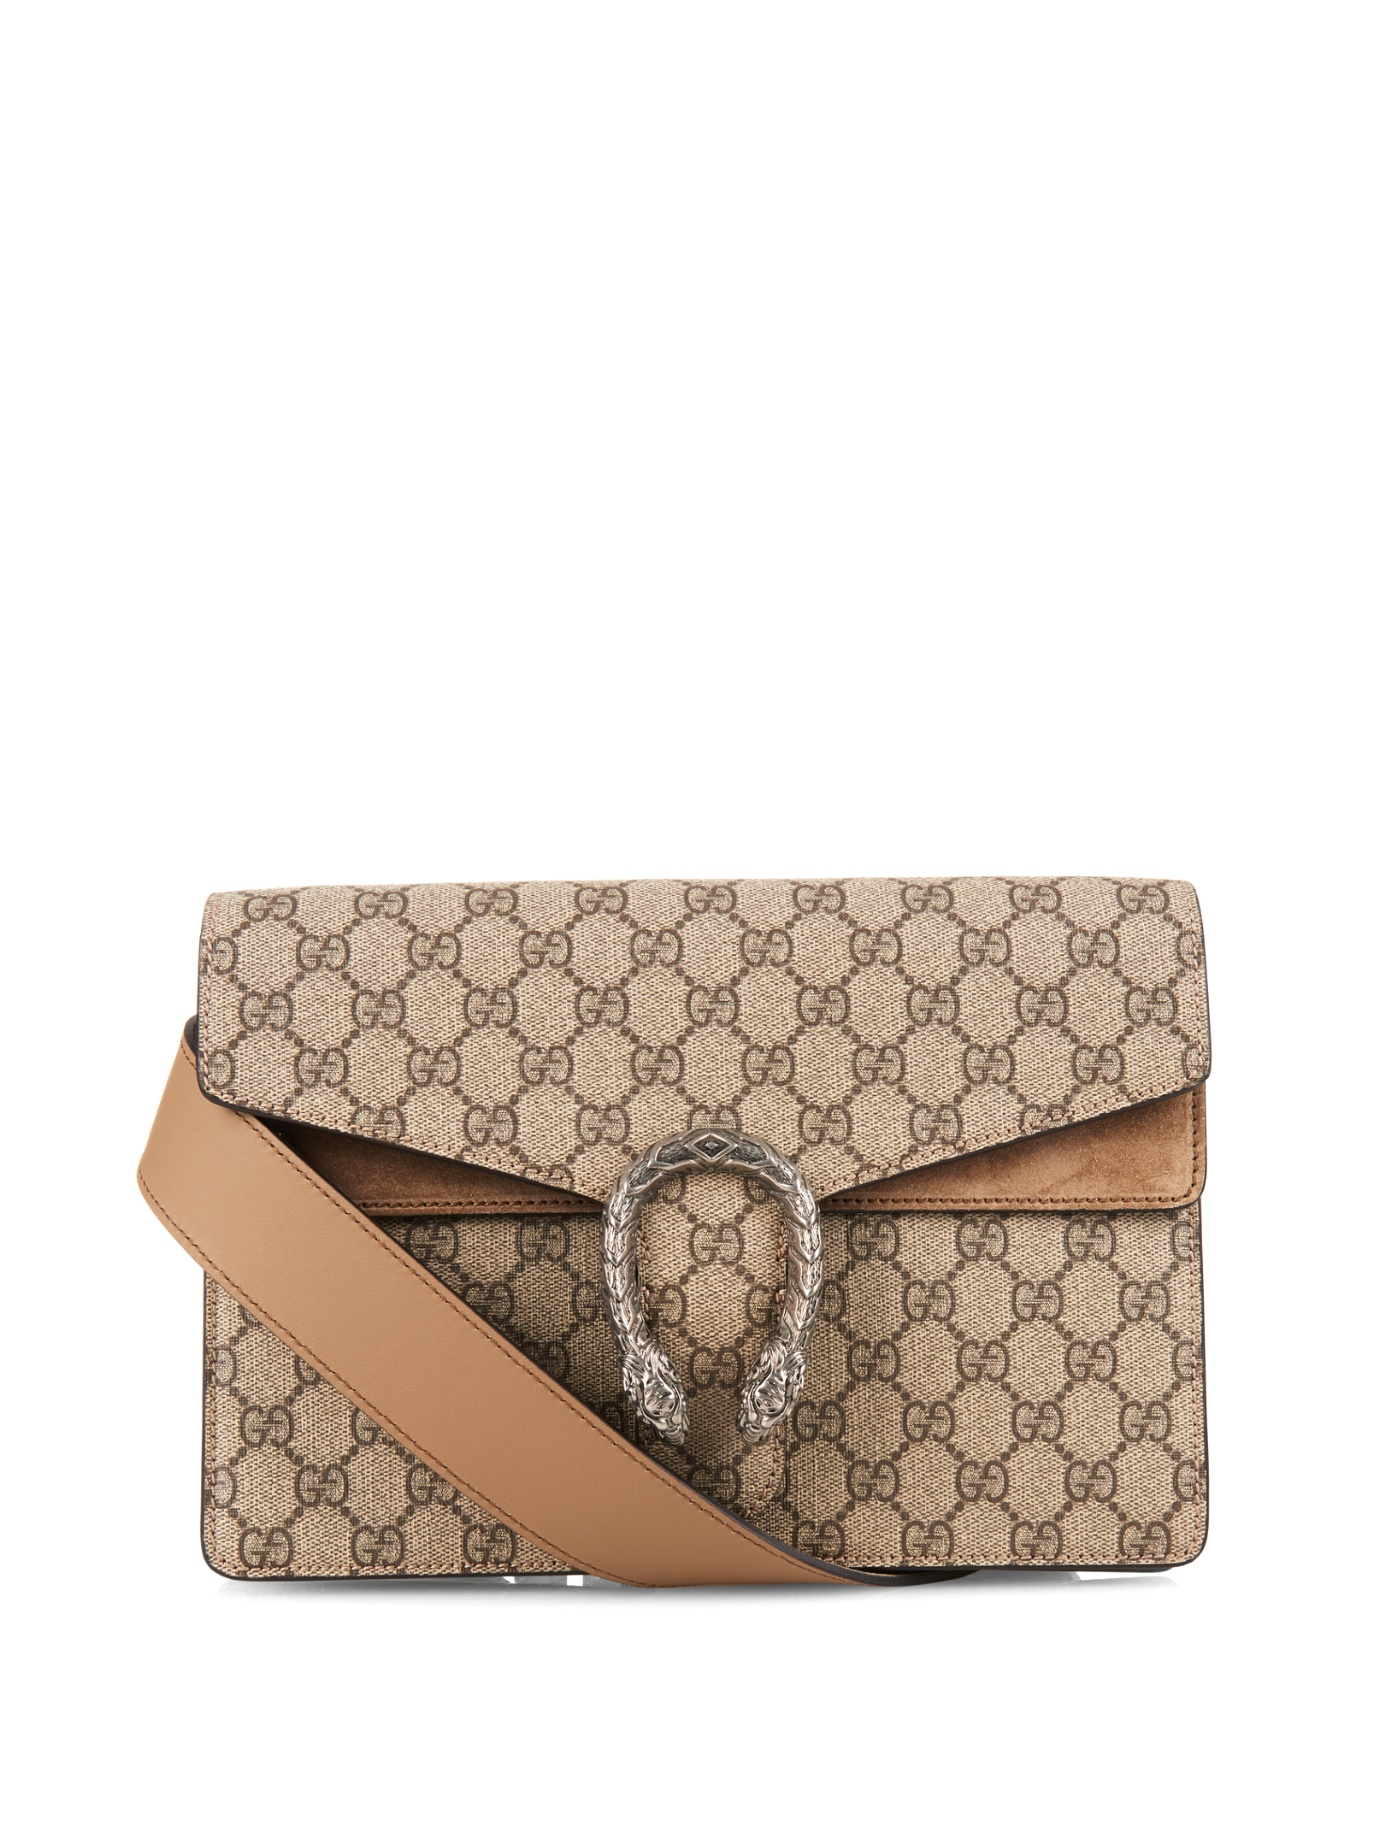 Gucci Dionysus Gg Supreme Canvas Belt-bag in Natural - Lyst